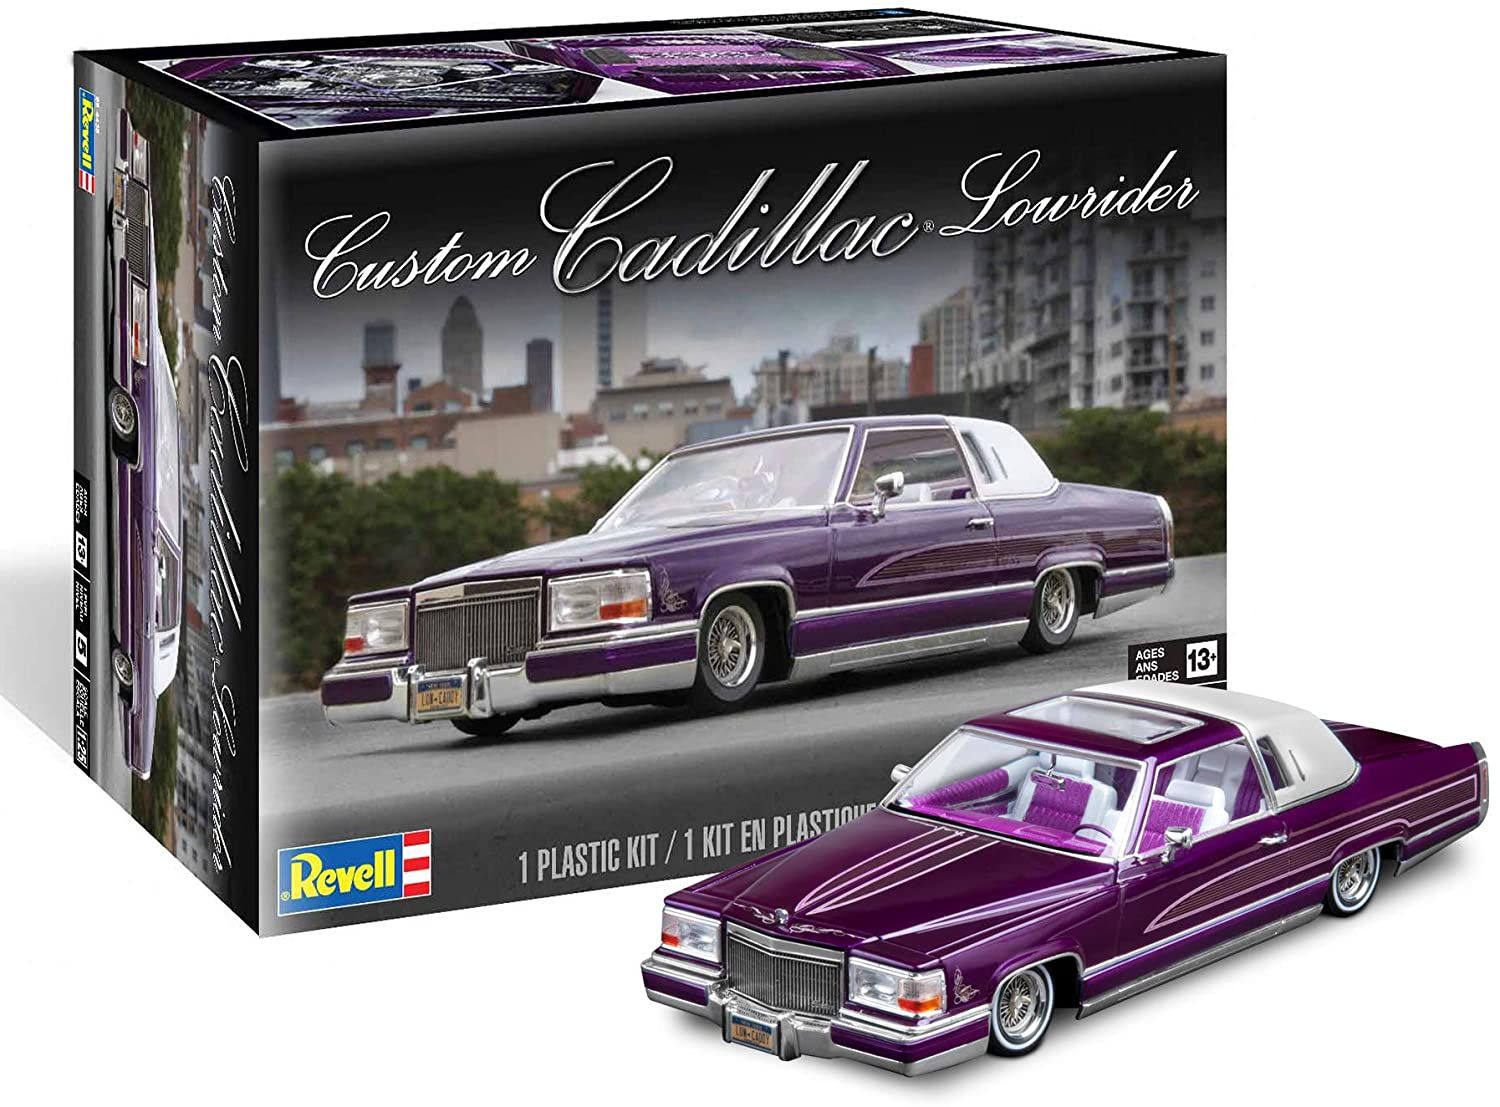 Revell 1/25 Scale Custom Cadillac Lowrider Plastic Model Kit